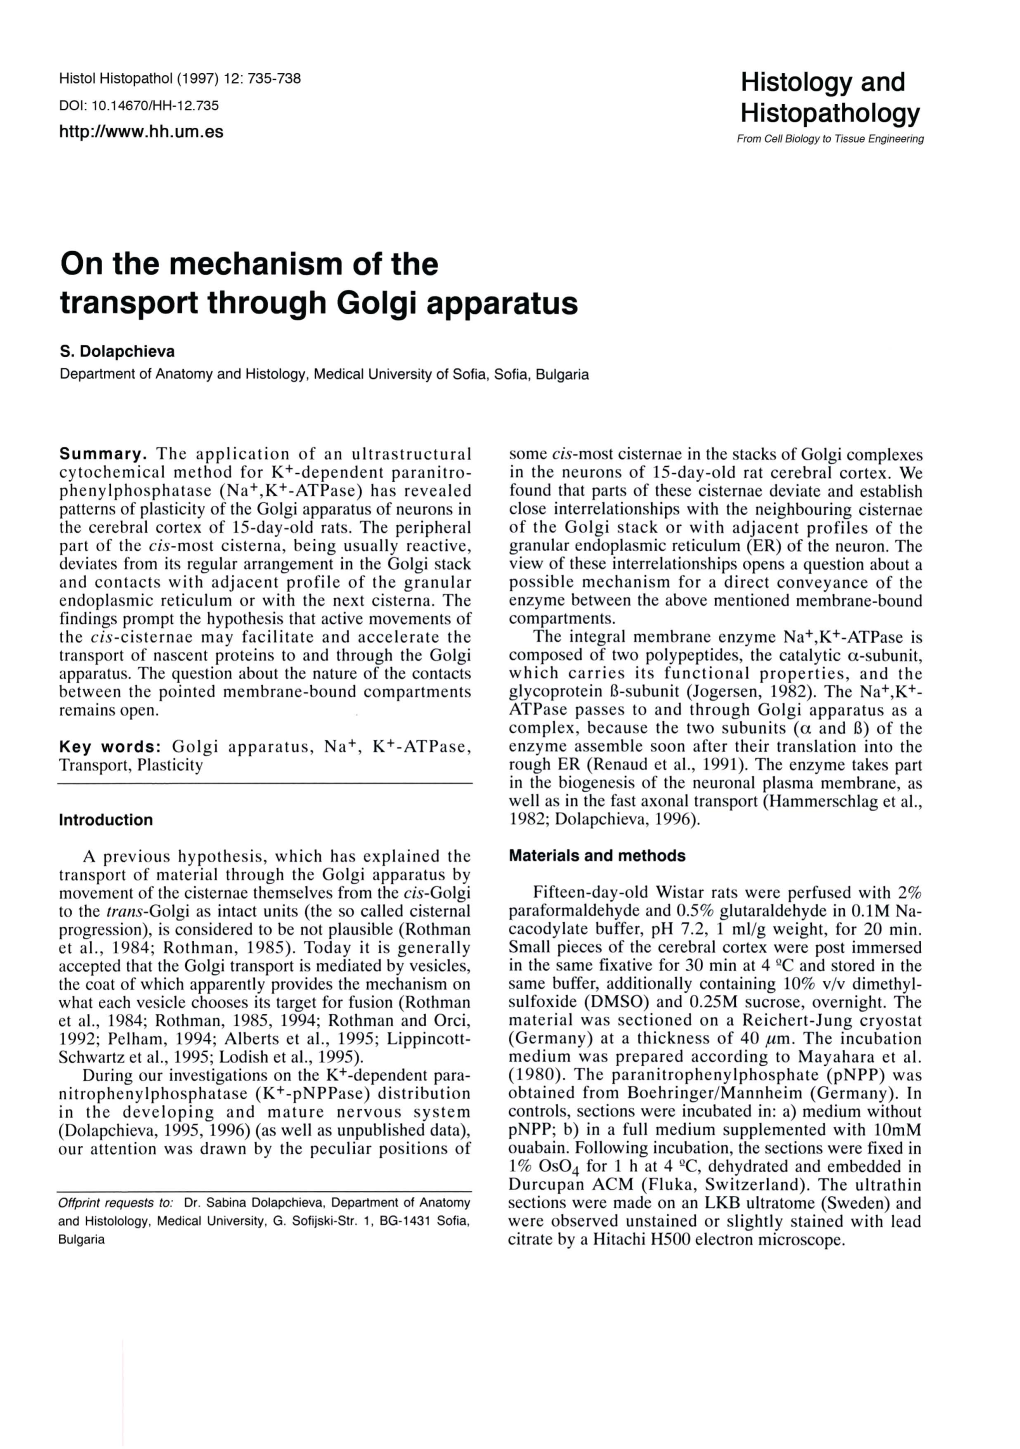 On the Mechanism of the Transport Through Golgi Apparatus